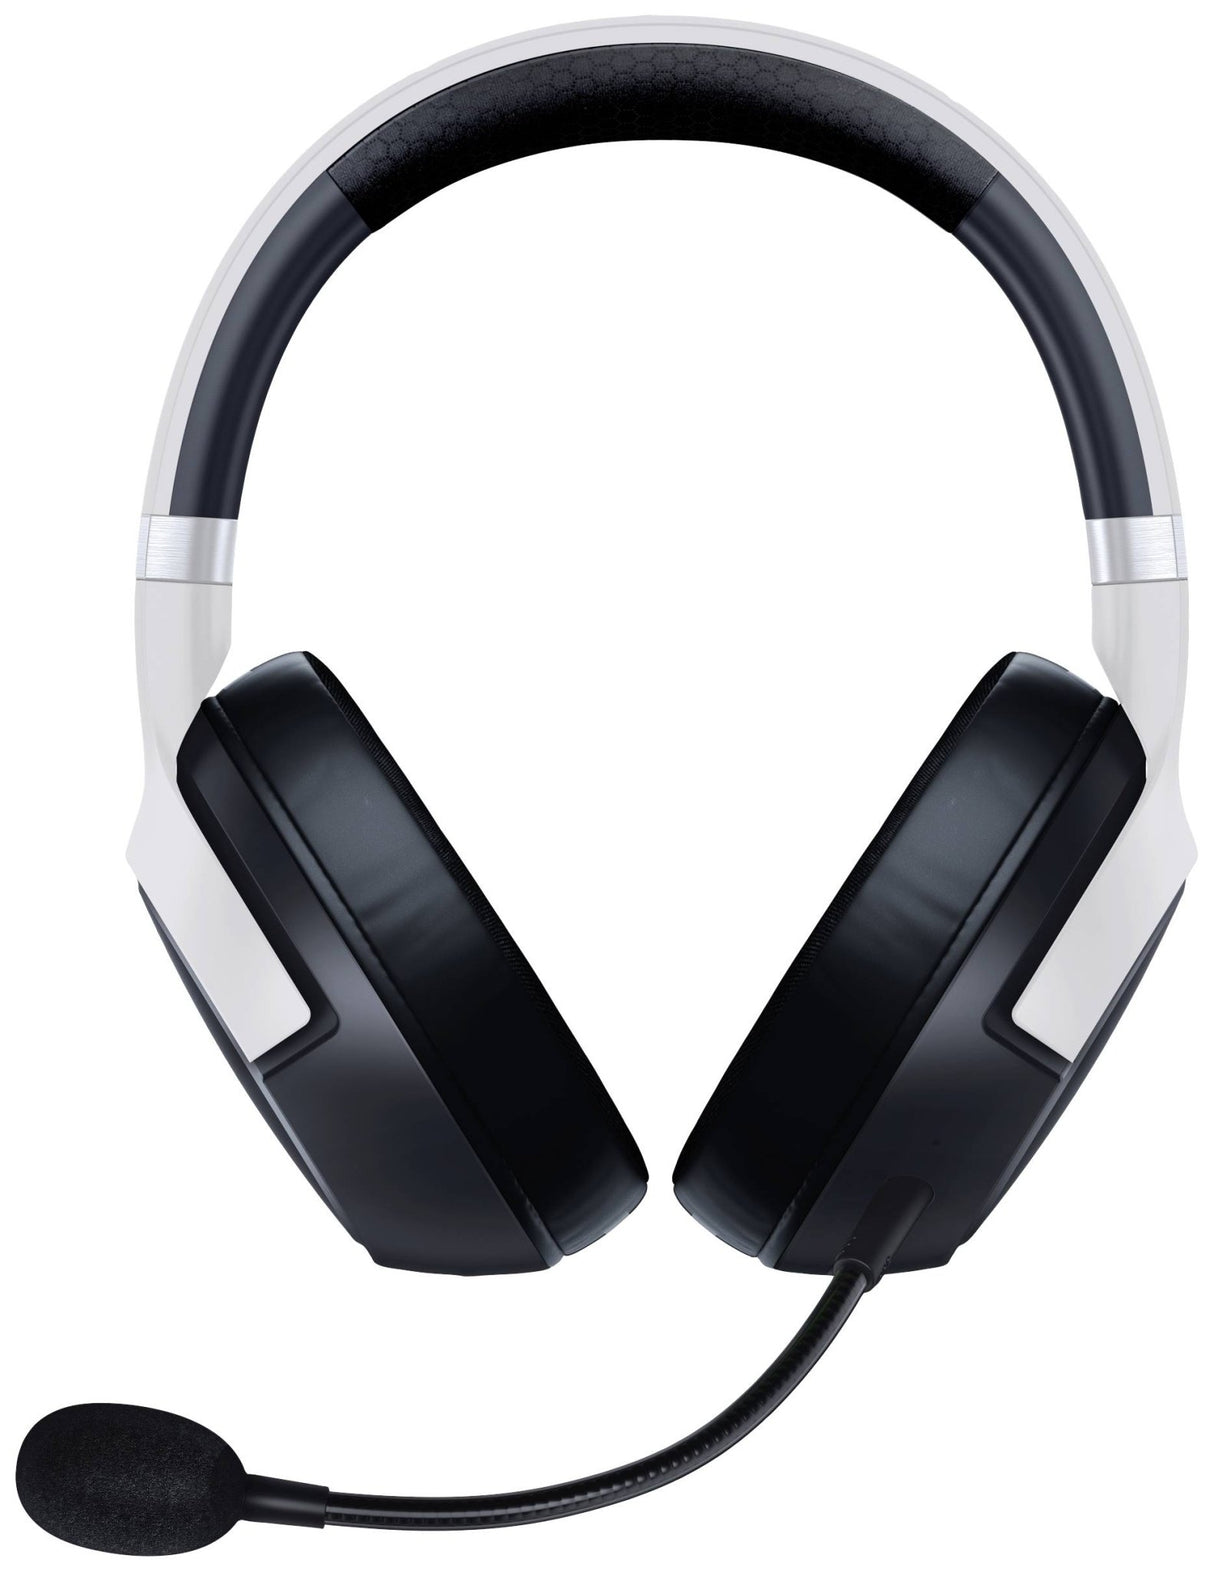 RAZER KAIRA PRO HYPERSPEED Wireless headset - Level UpRazerHeadset8887910060247